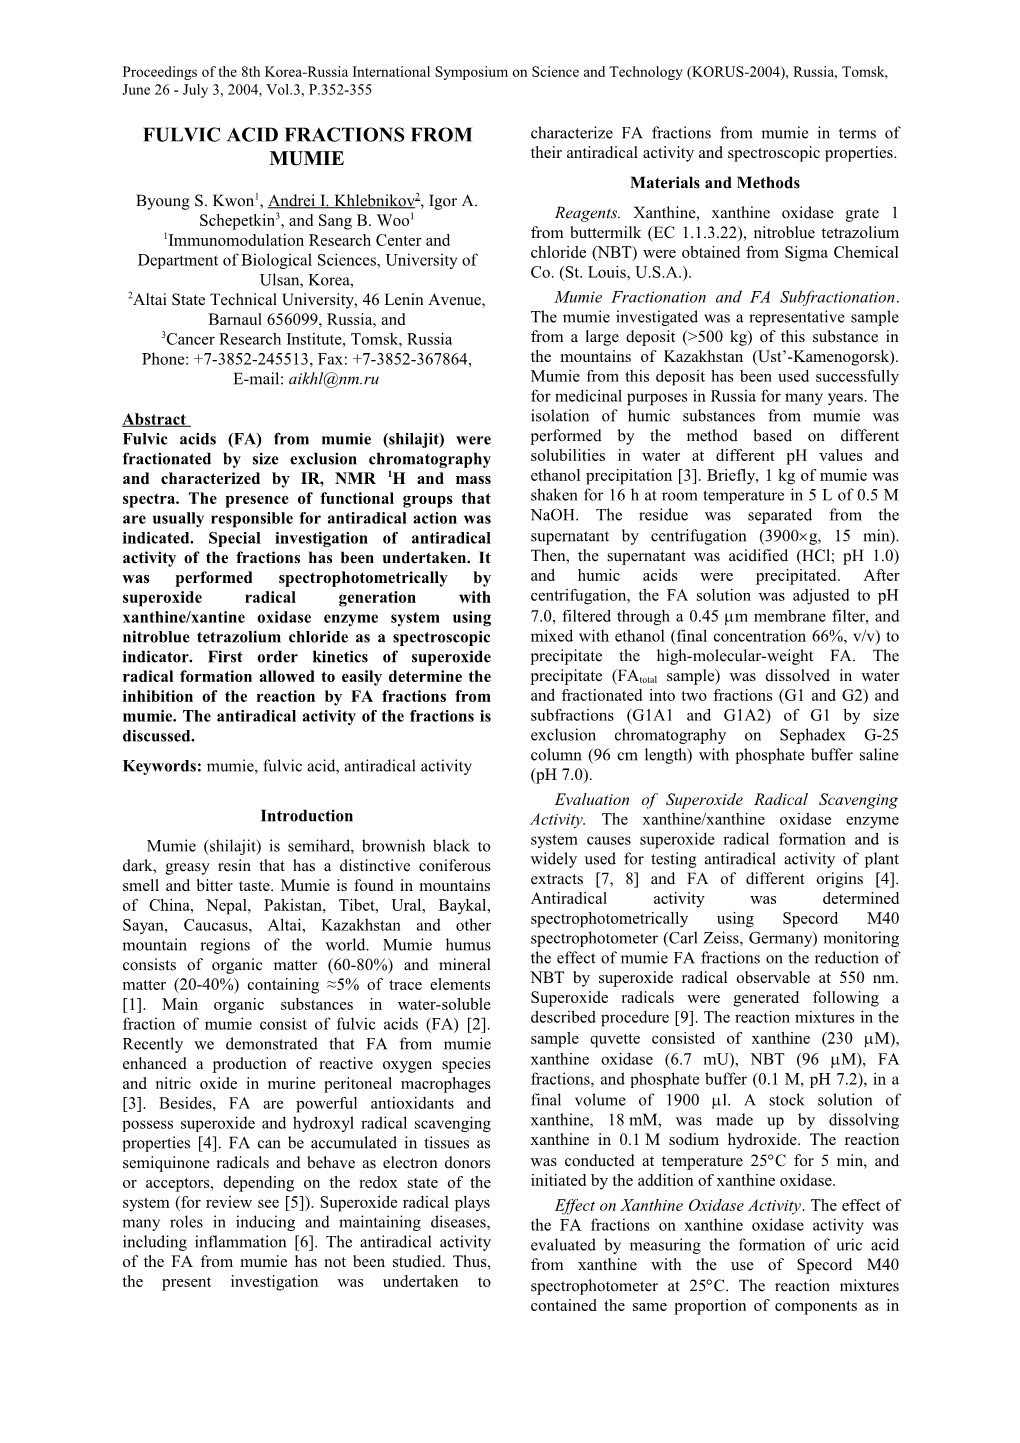 Fulvic Acid Induced H2O2 Production in Cartilage Cells (Ioannidis Et Al